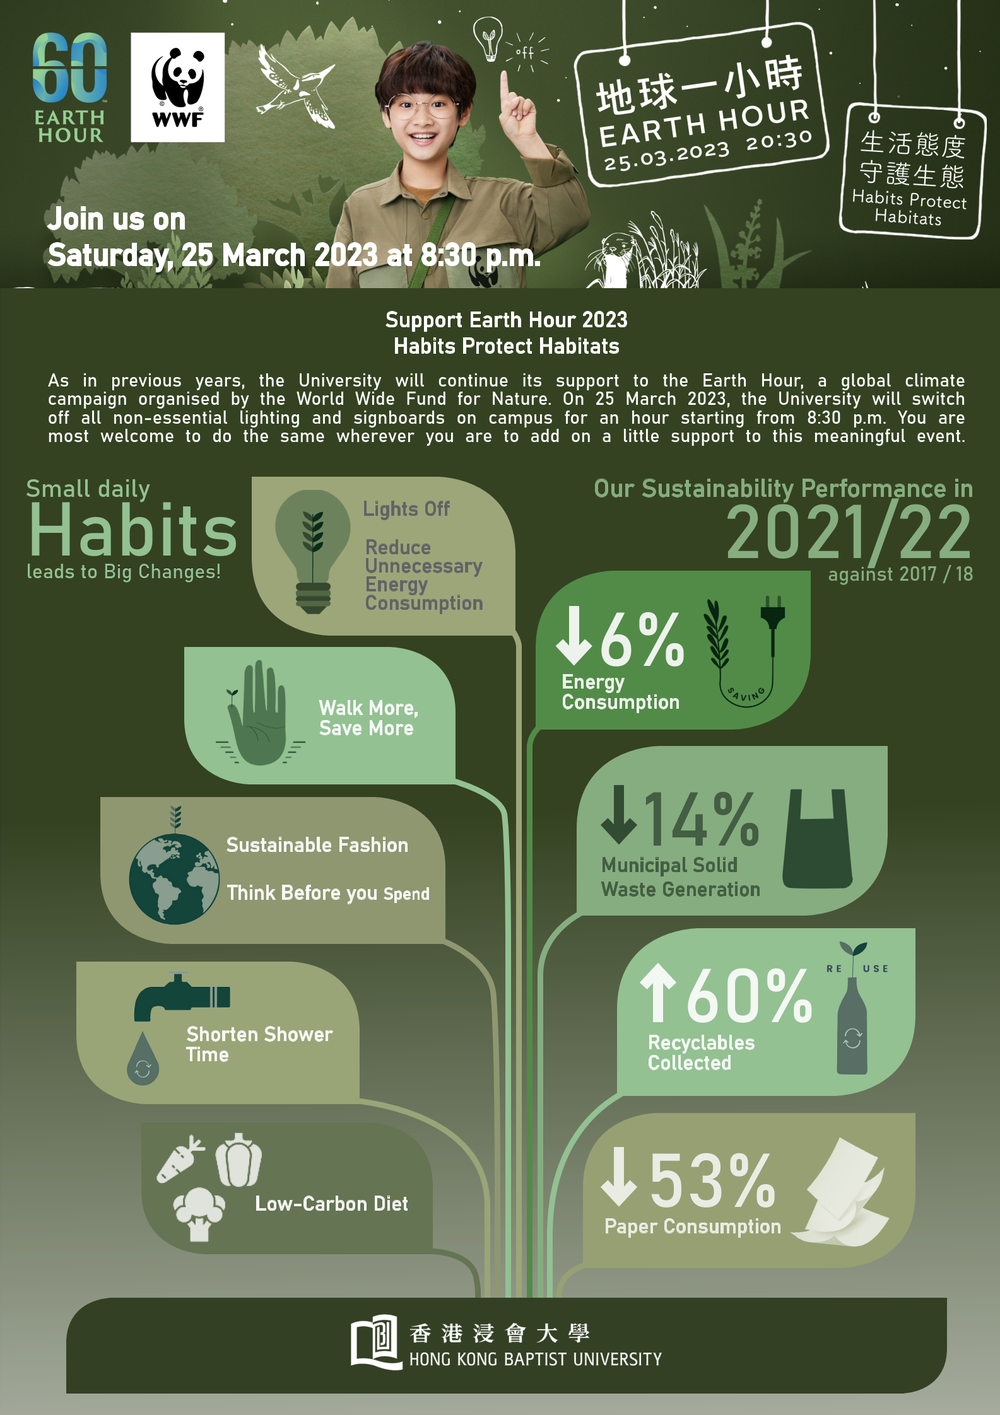 15. Habits Protect Habitats